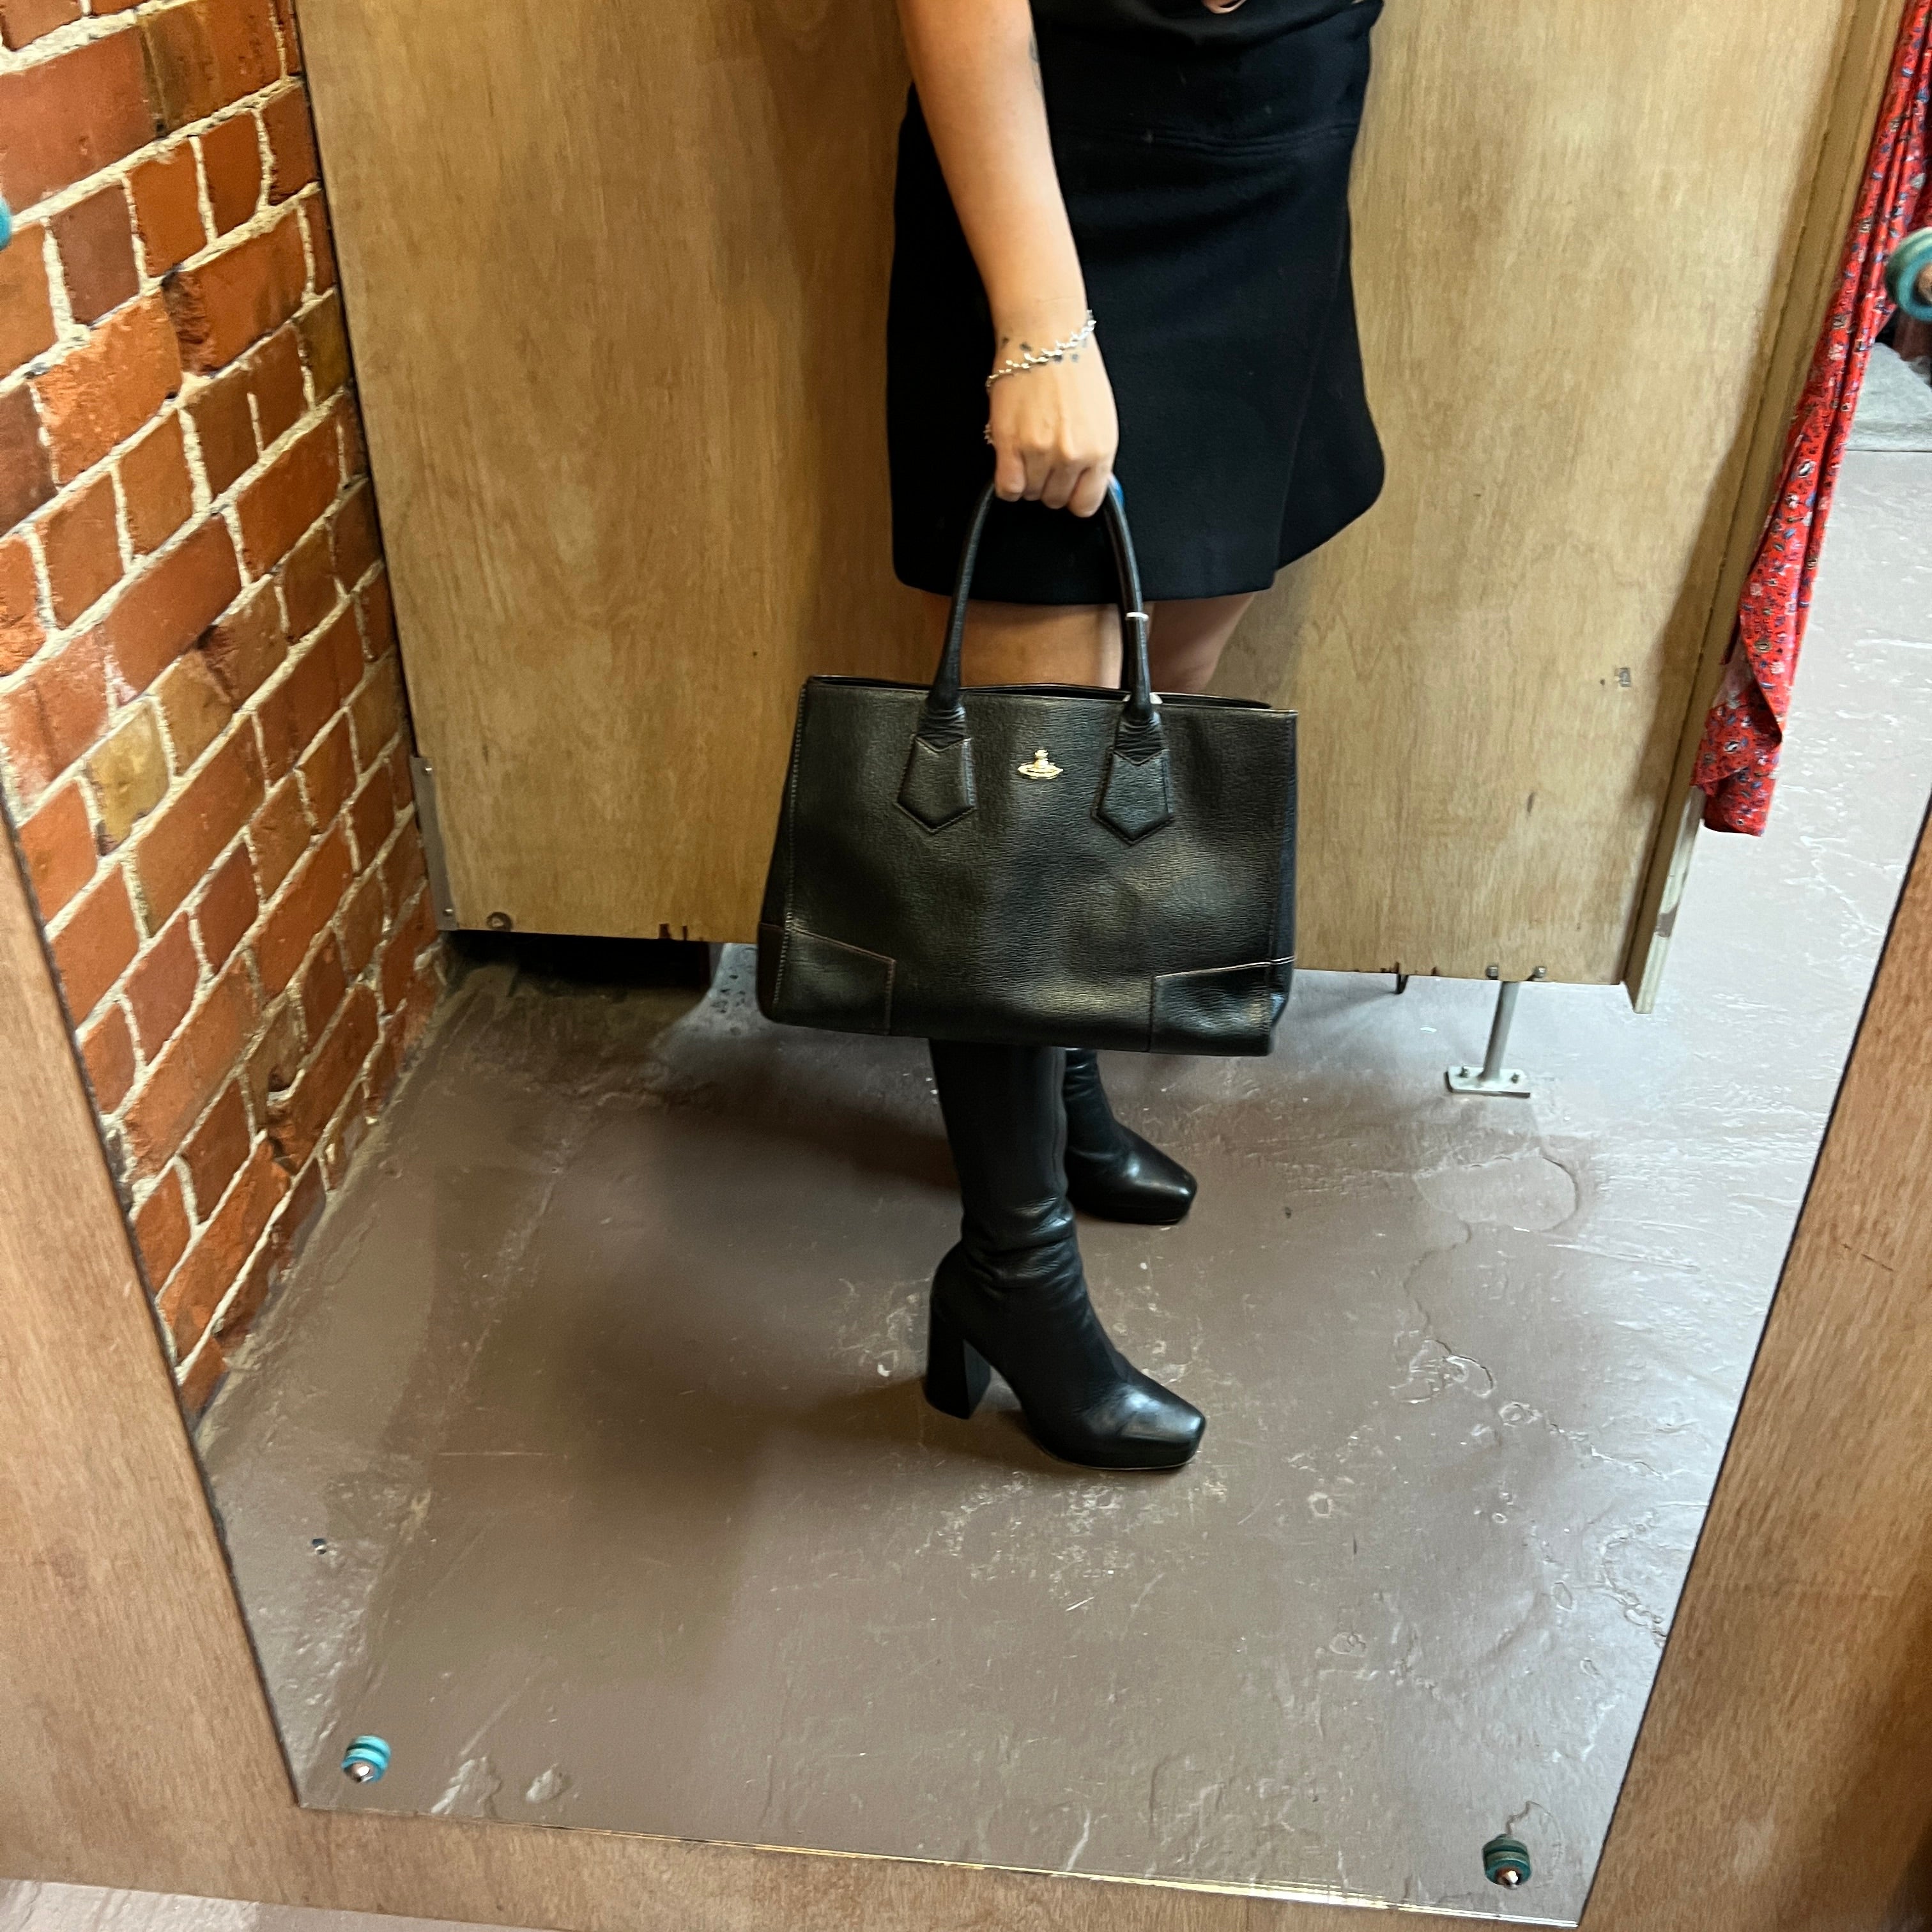 VIVIENNE WESTWOOD classic leather handbag